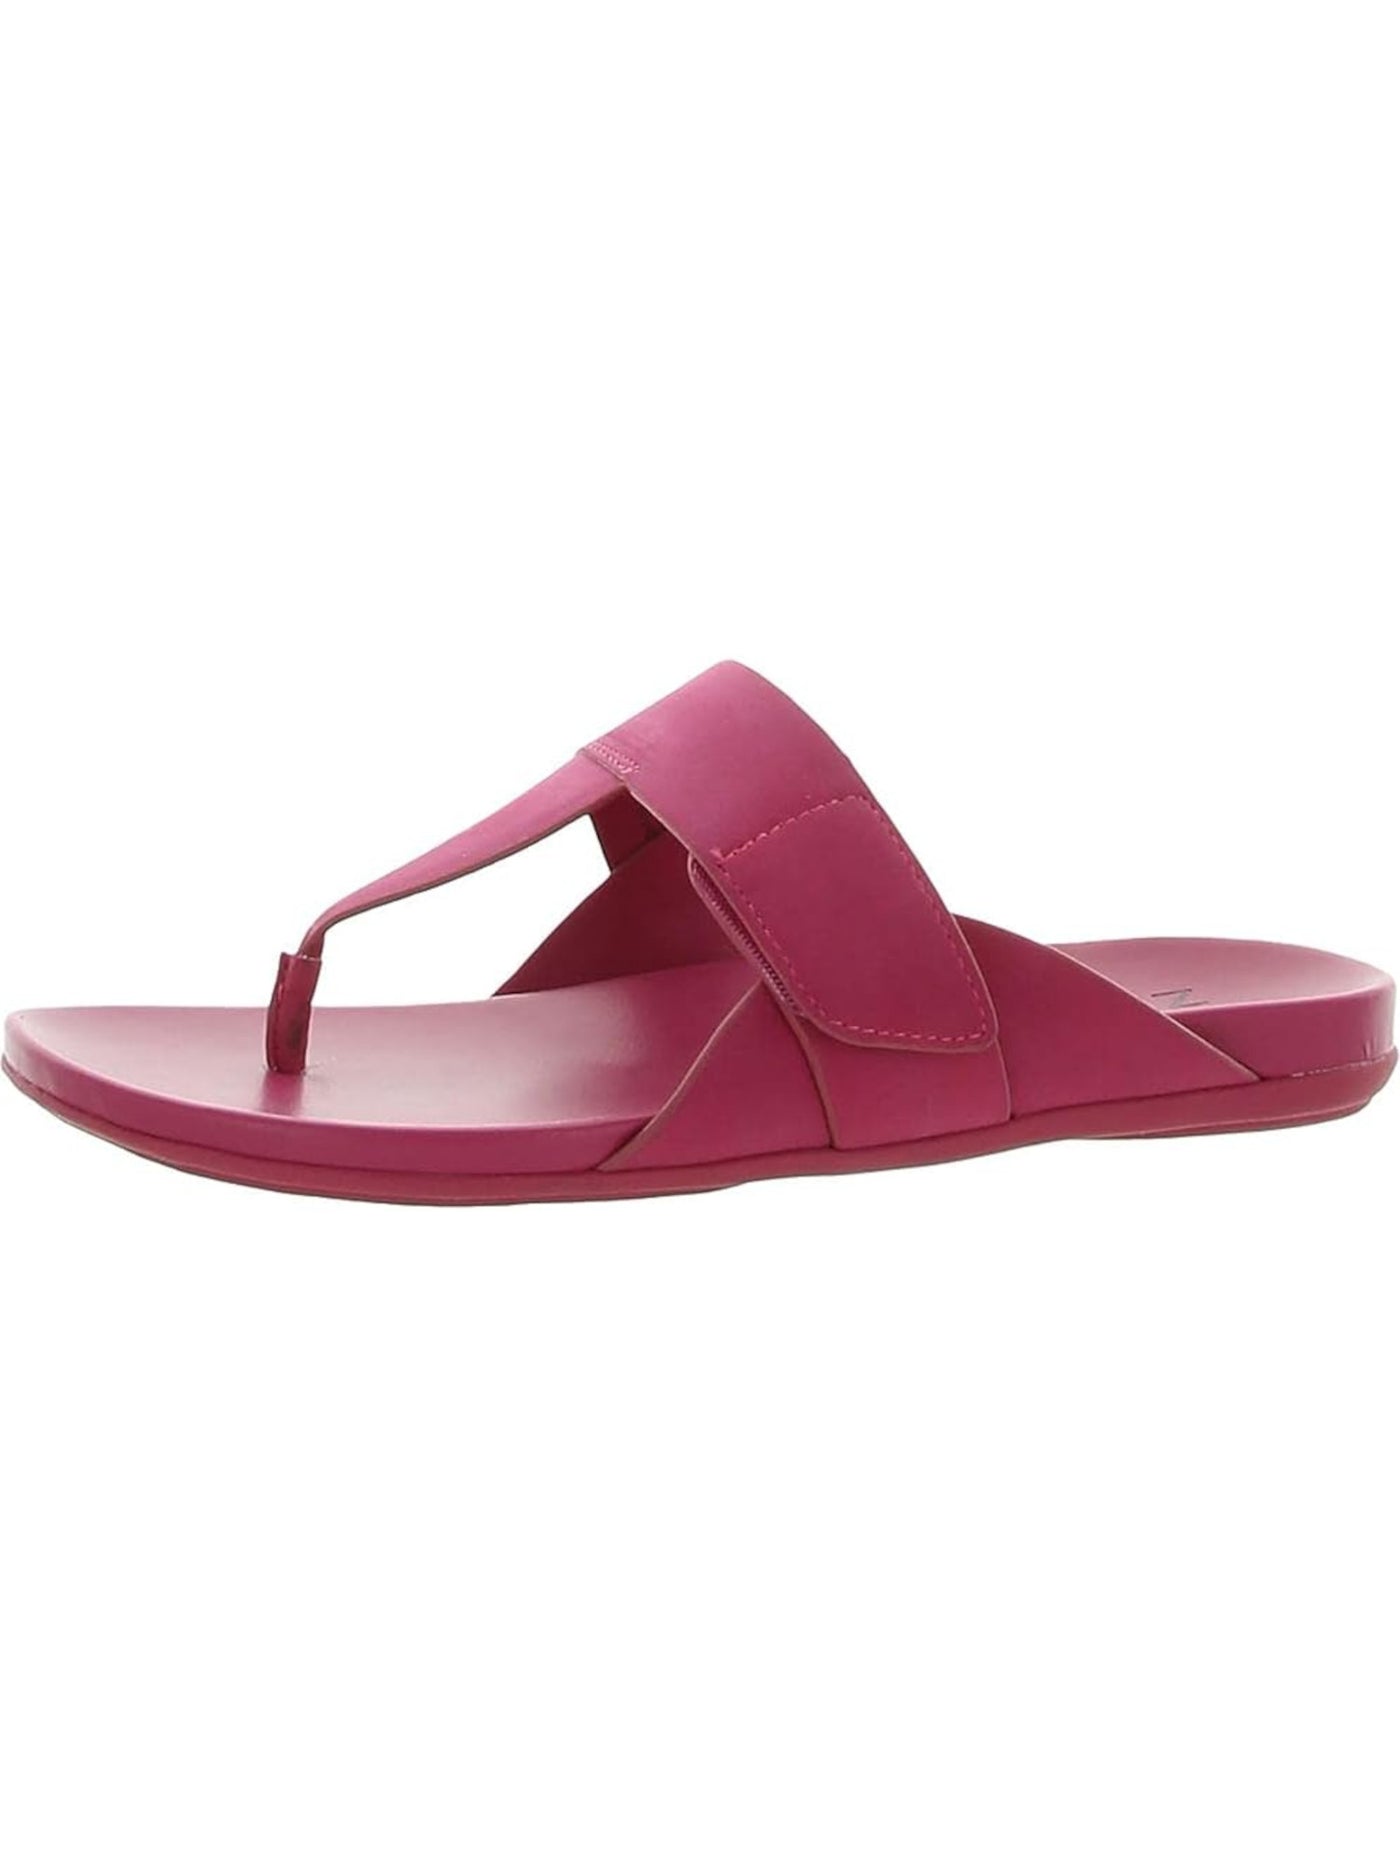 NATURALIZER Womens Pink Slip Resistant Adjustable Genn-twirl Round Toe Wedge Slip On Thong Sandals Shoes 8 M